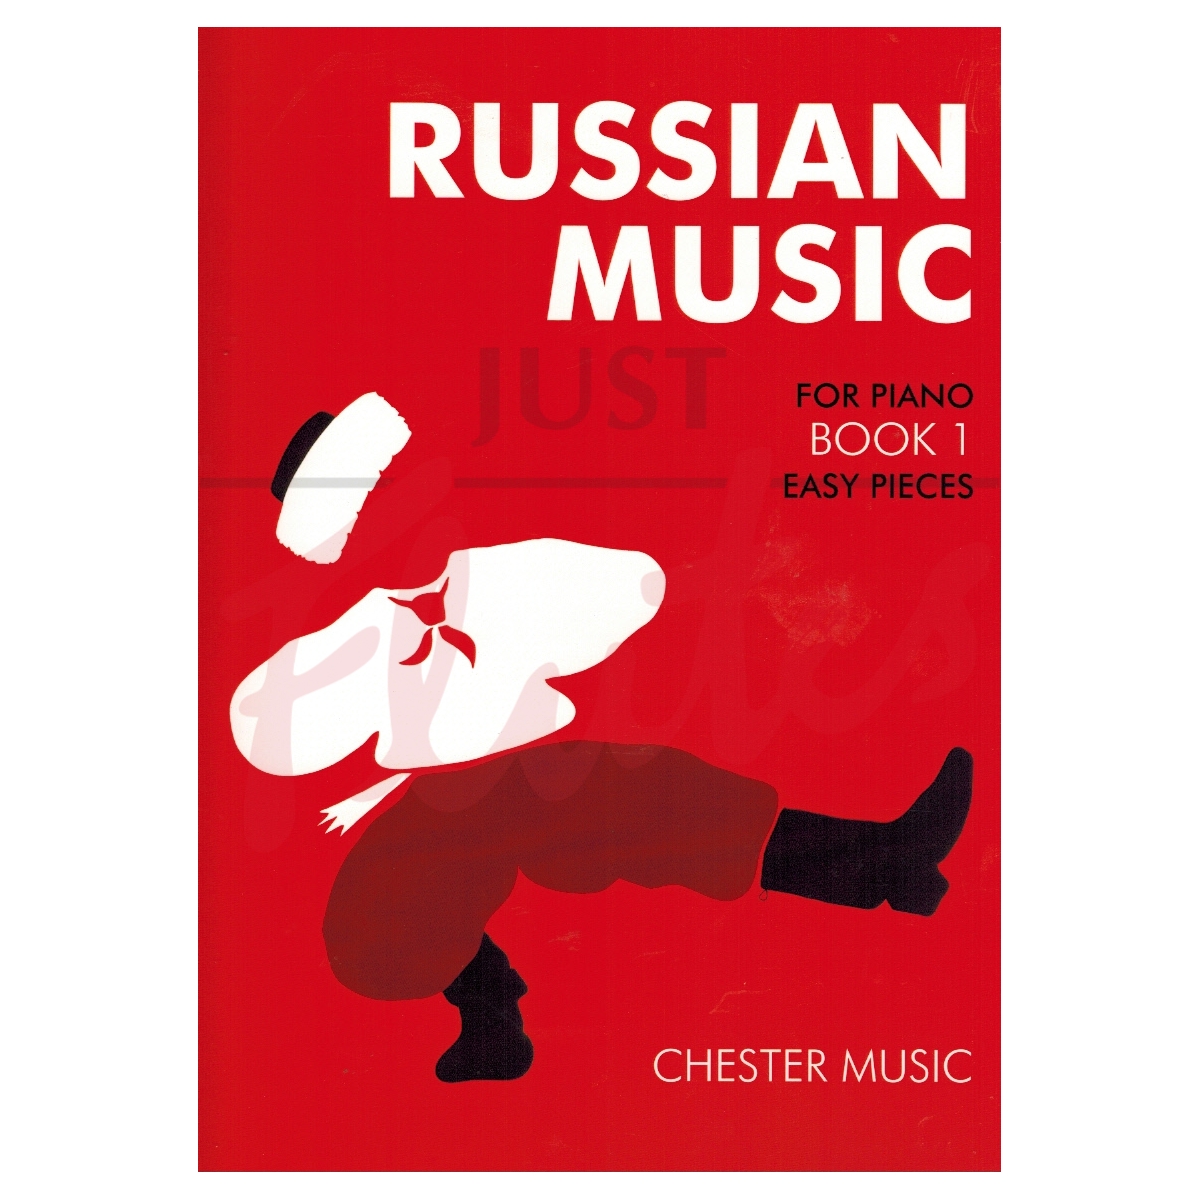 Russian Music for Piano Book 1